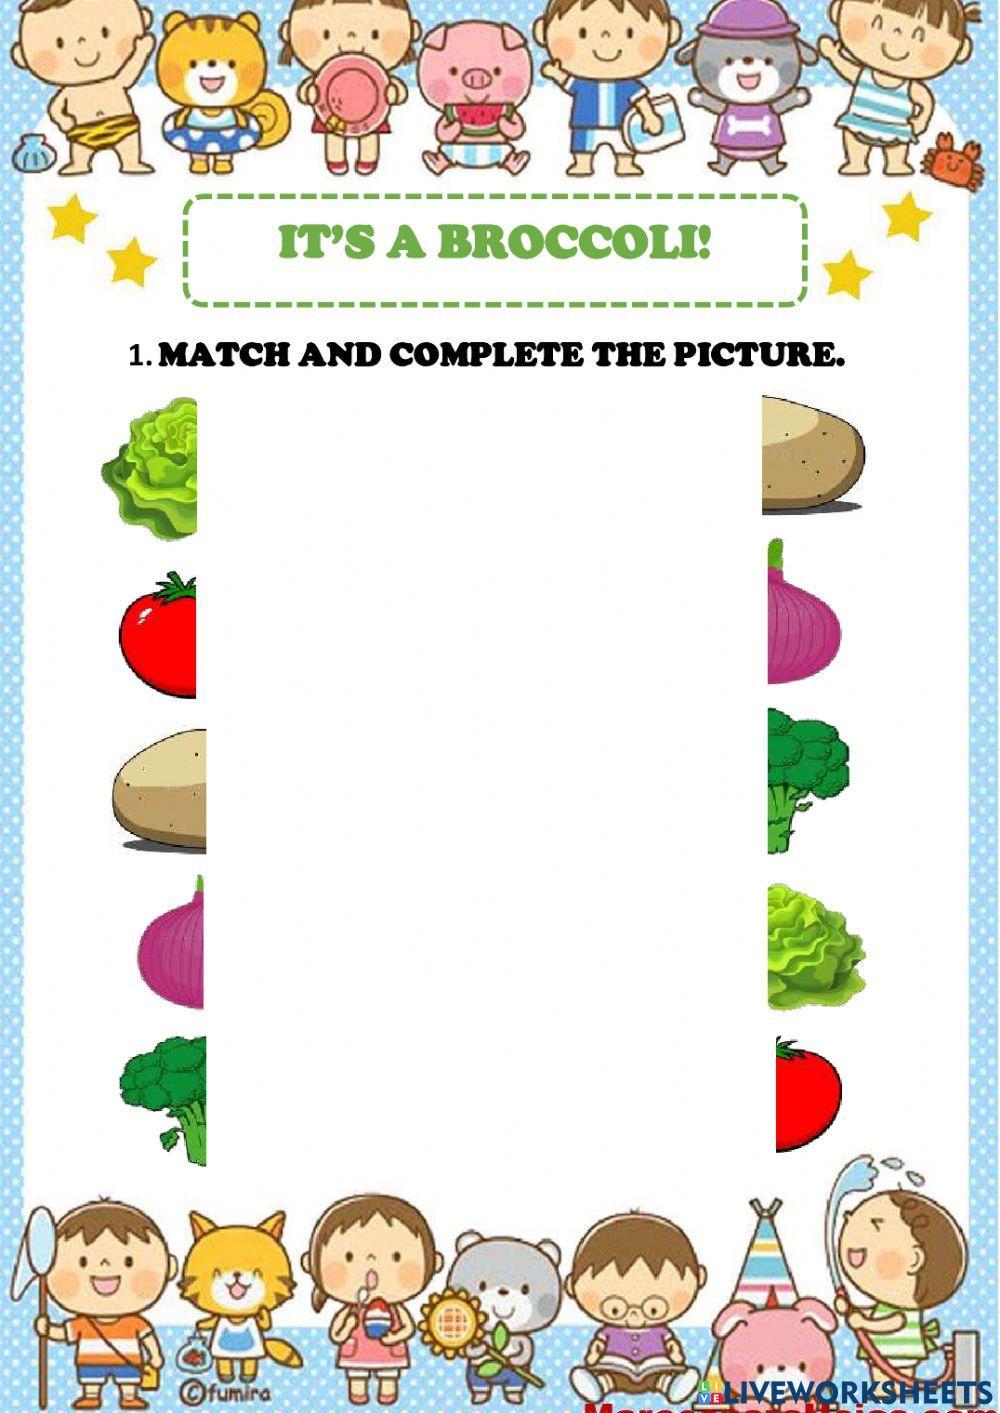 It's a broccoli